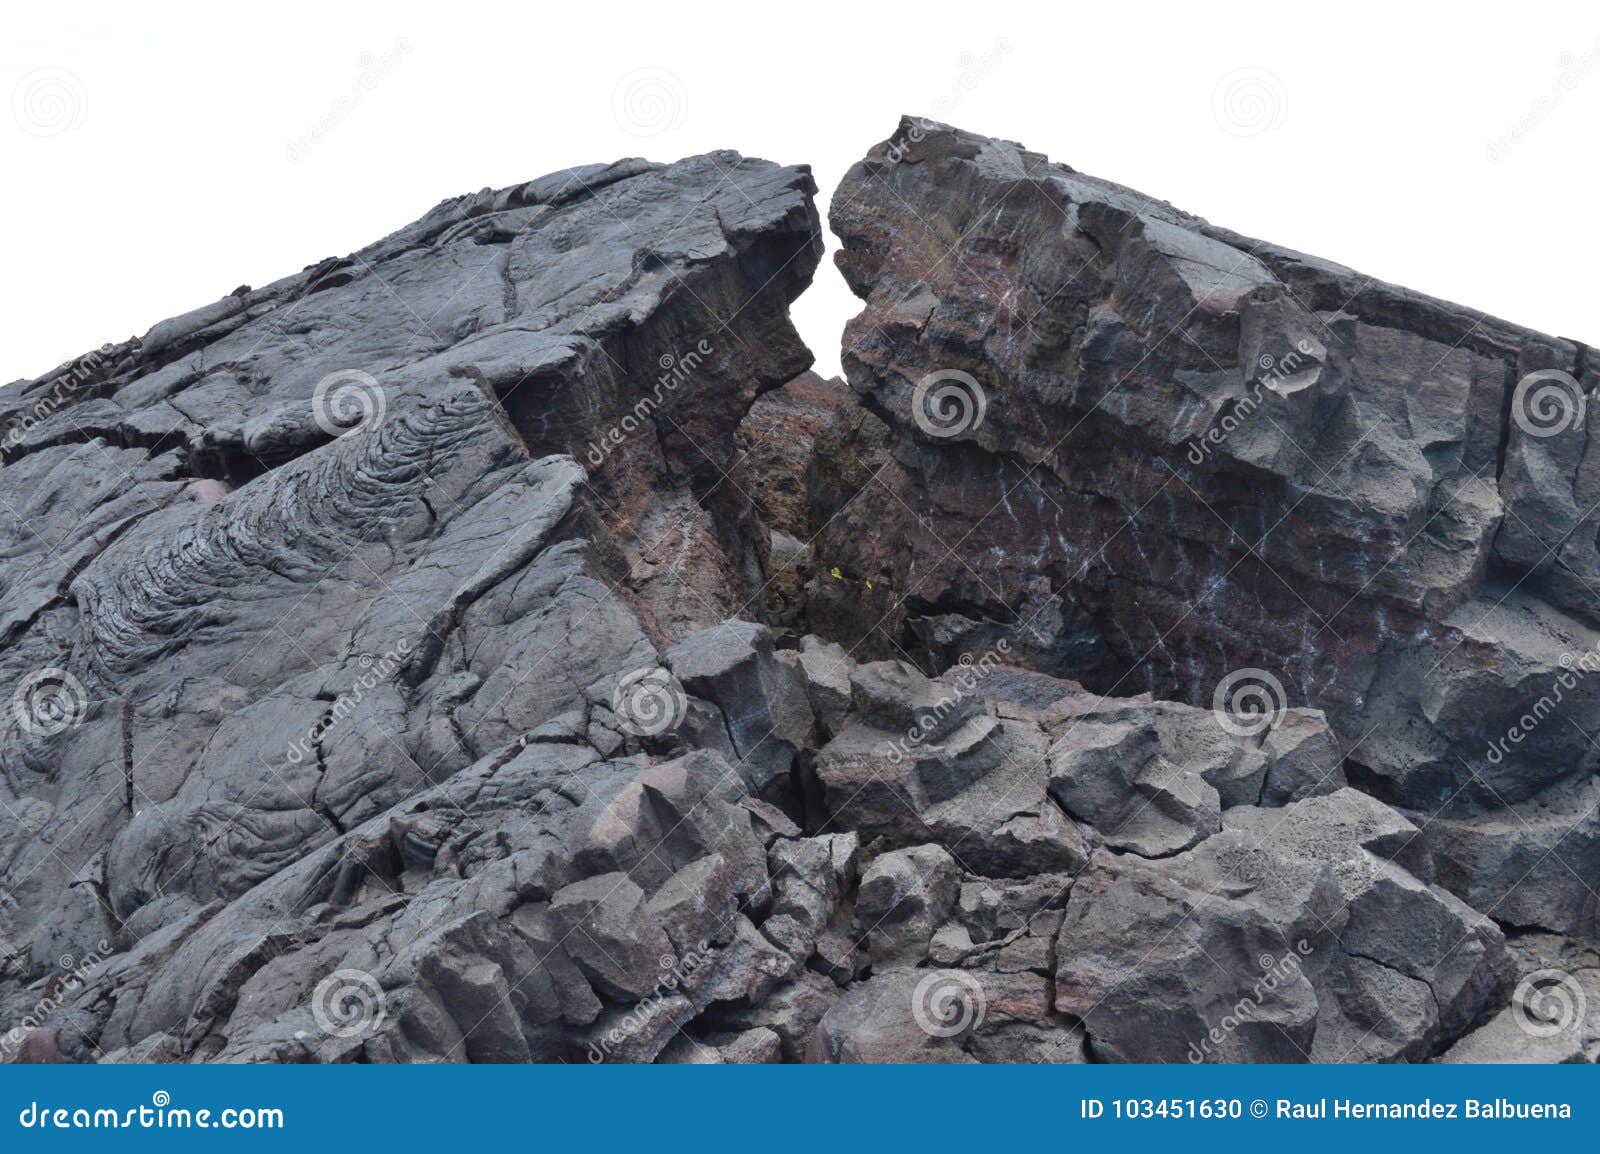 lava rocks next to erupting volcano.